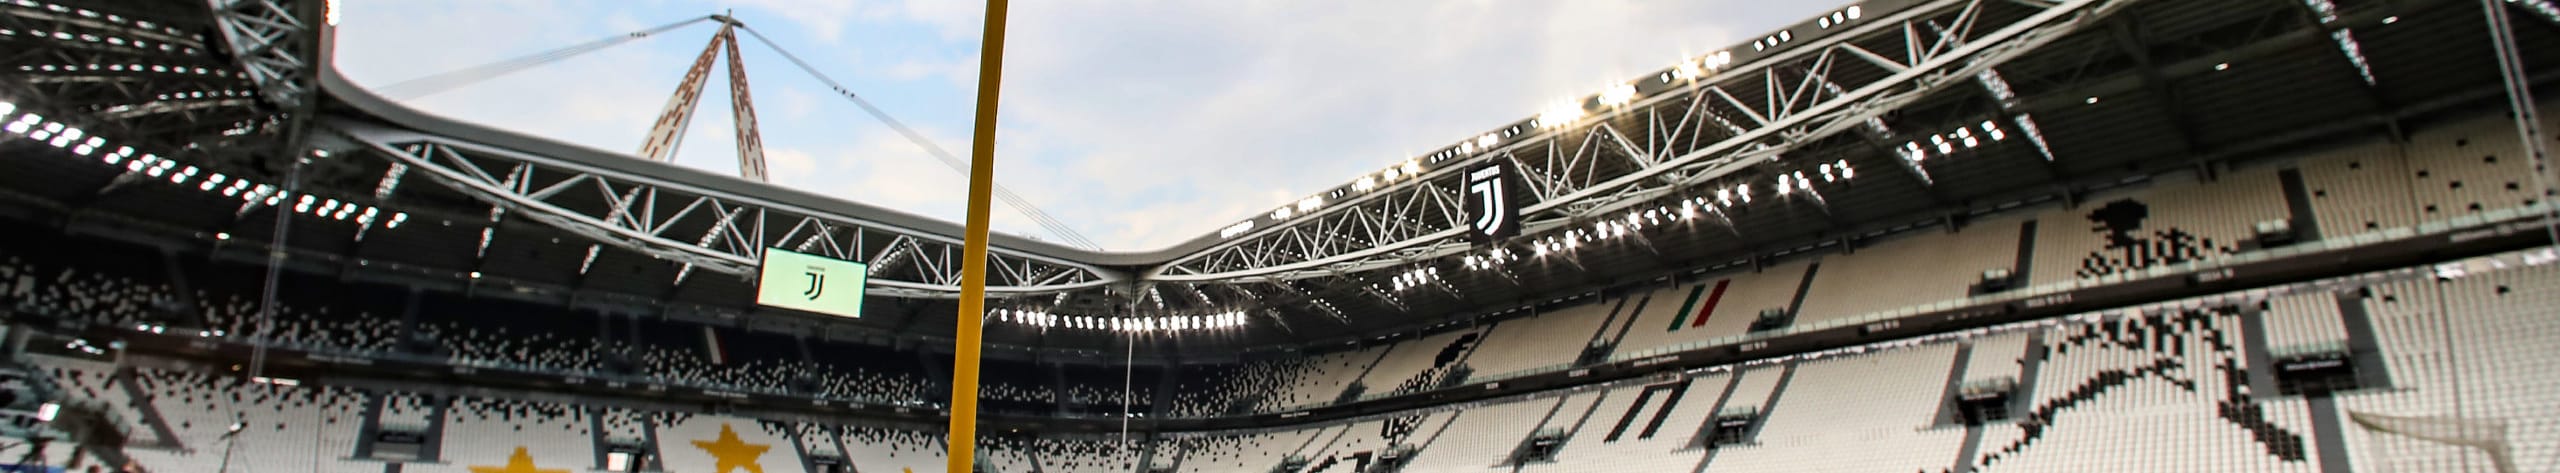 Pronostico Juventus-Torino: dubbio in regia per Sarri, Toro con il 3-5-2 - le ultimissime